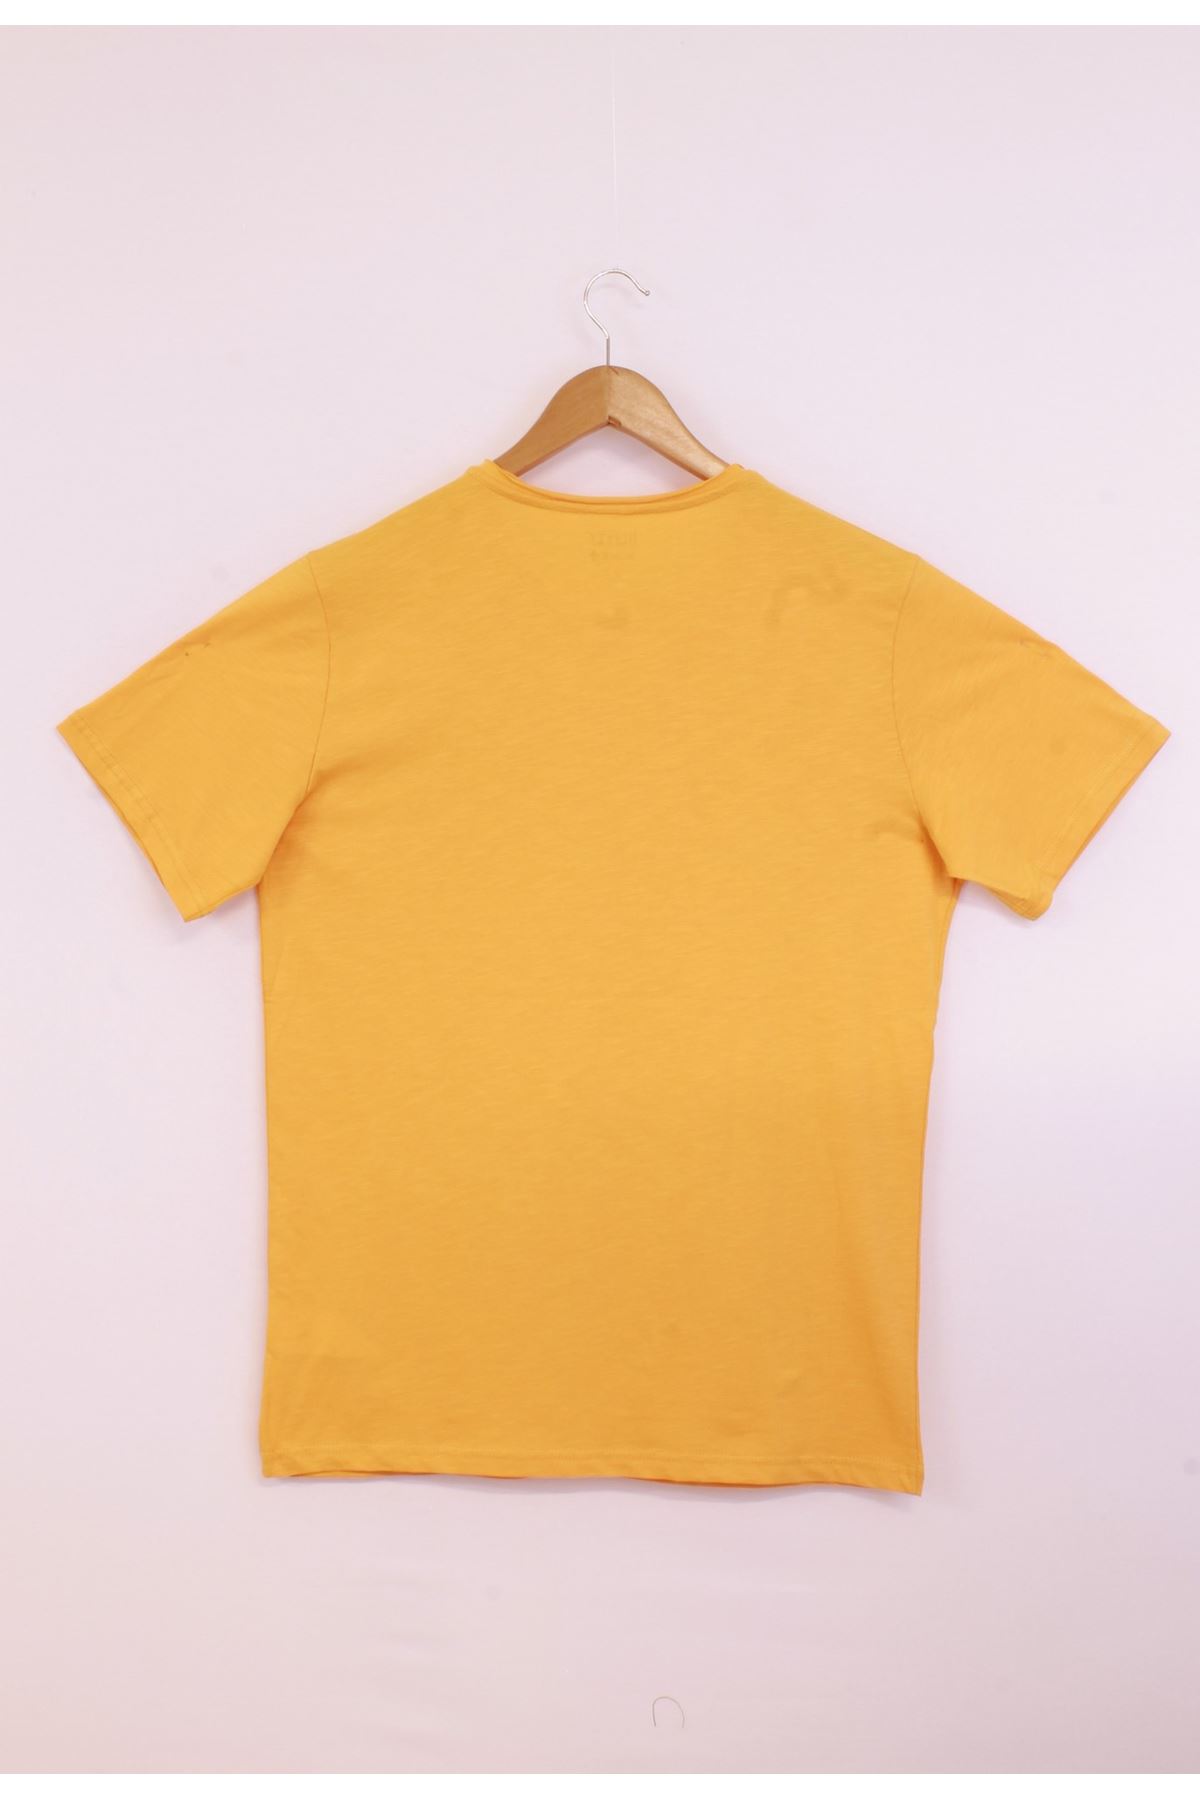 Giyinsen Erkek Sarı  Tişört - 23YL71L58003